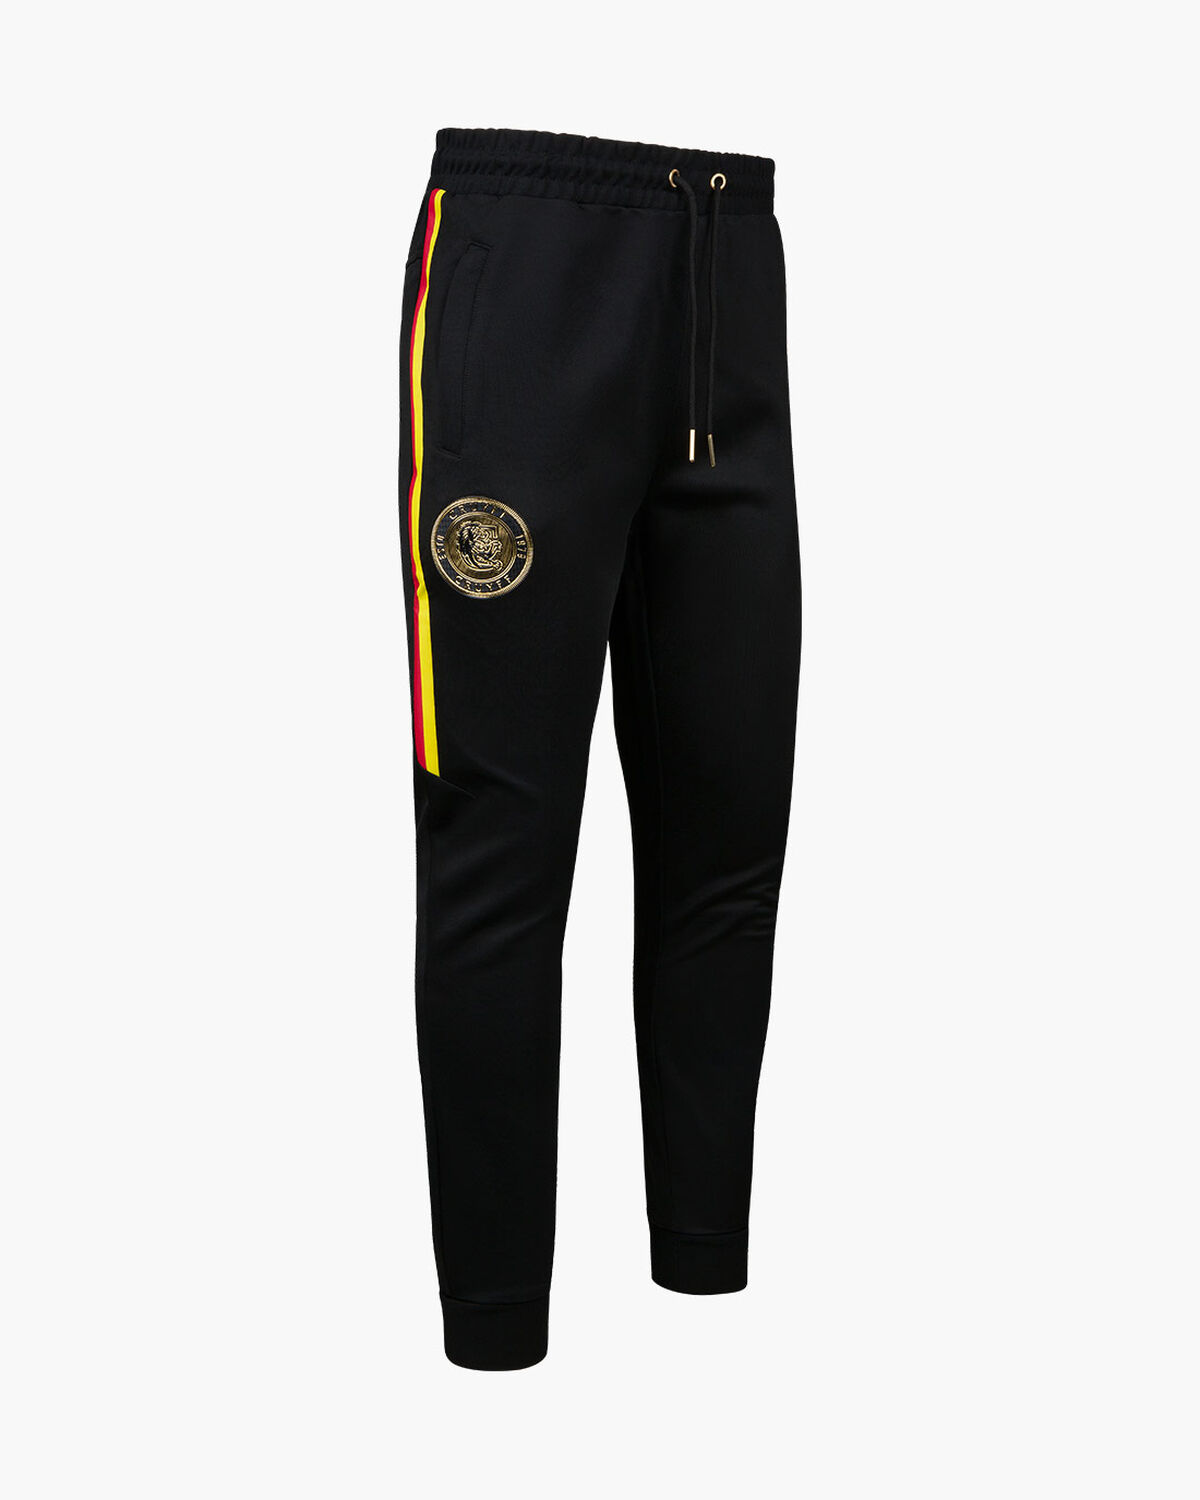 Shop Euro Track Pants - Black (Germany) - 65% Polyester